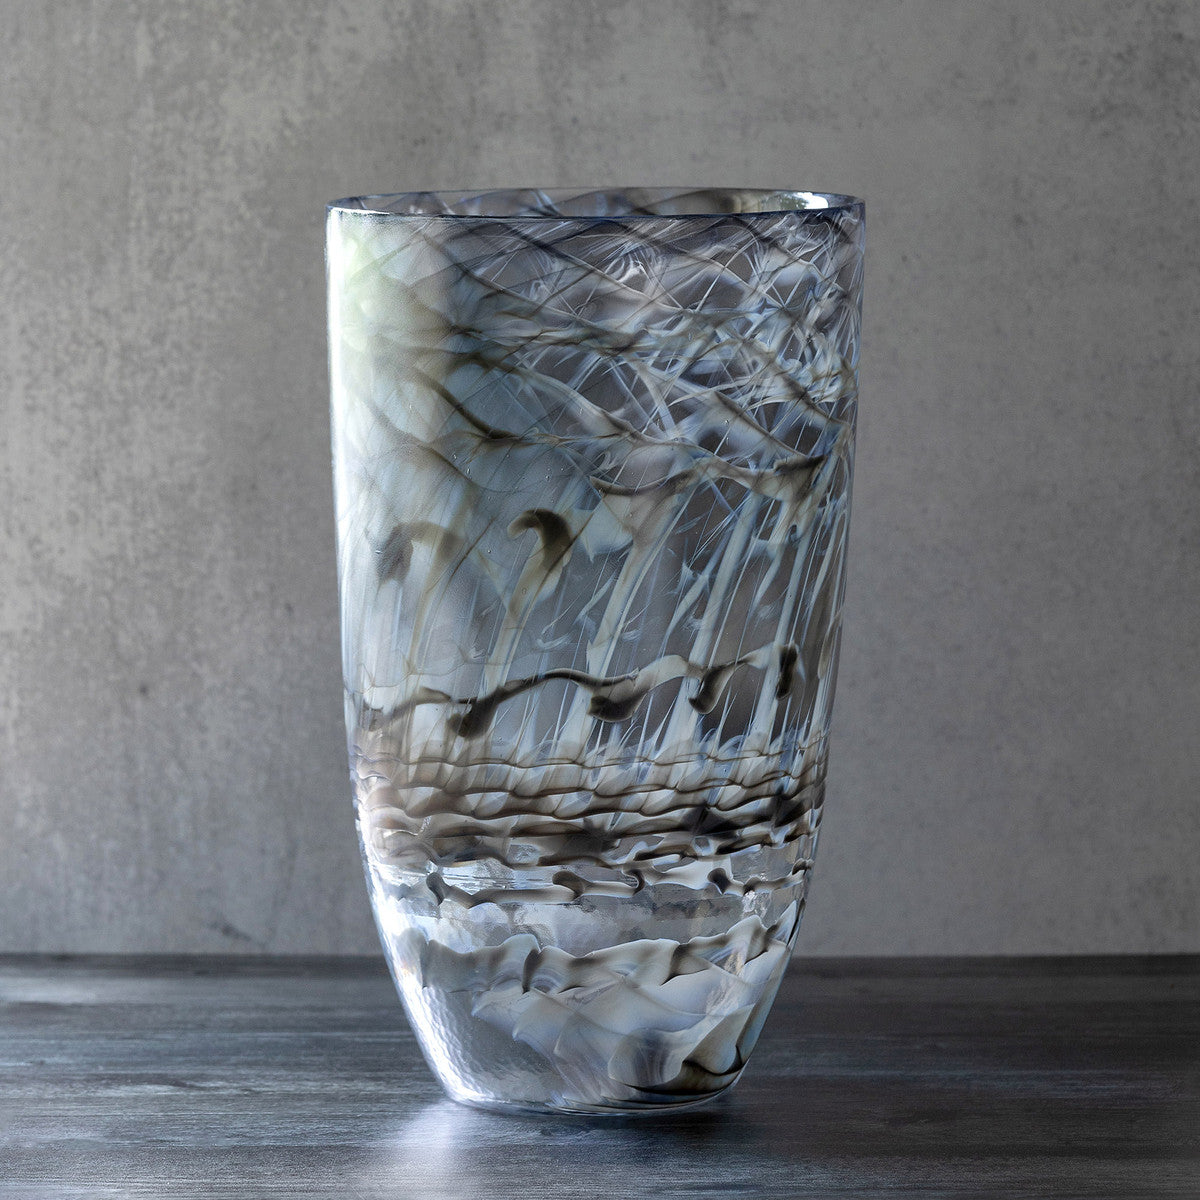 Jagger Murano Glass Vase - Online Only